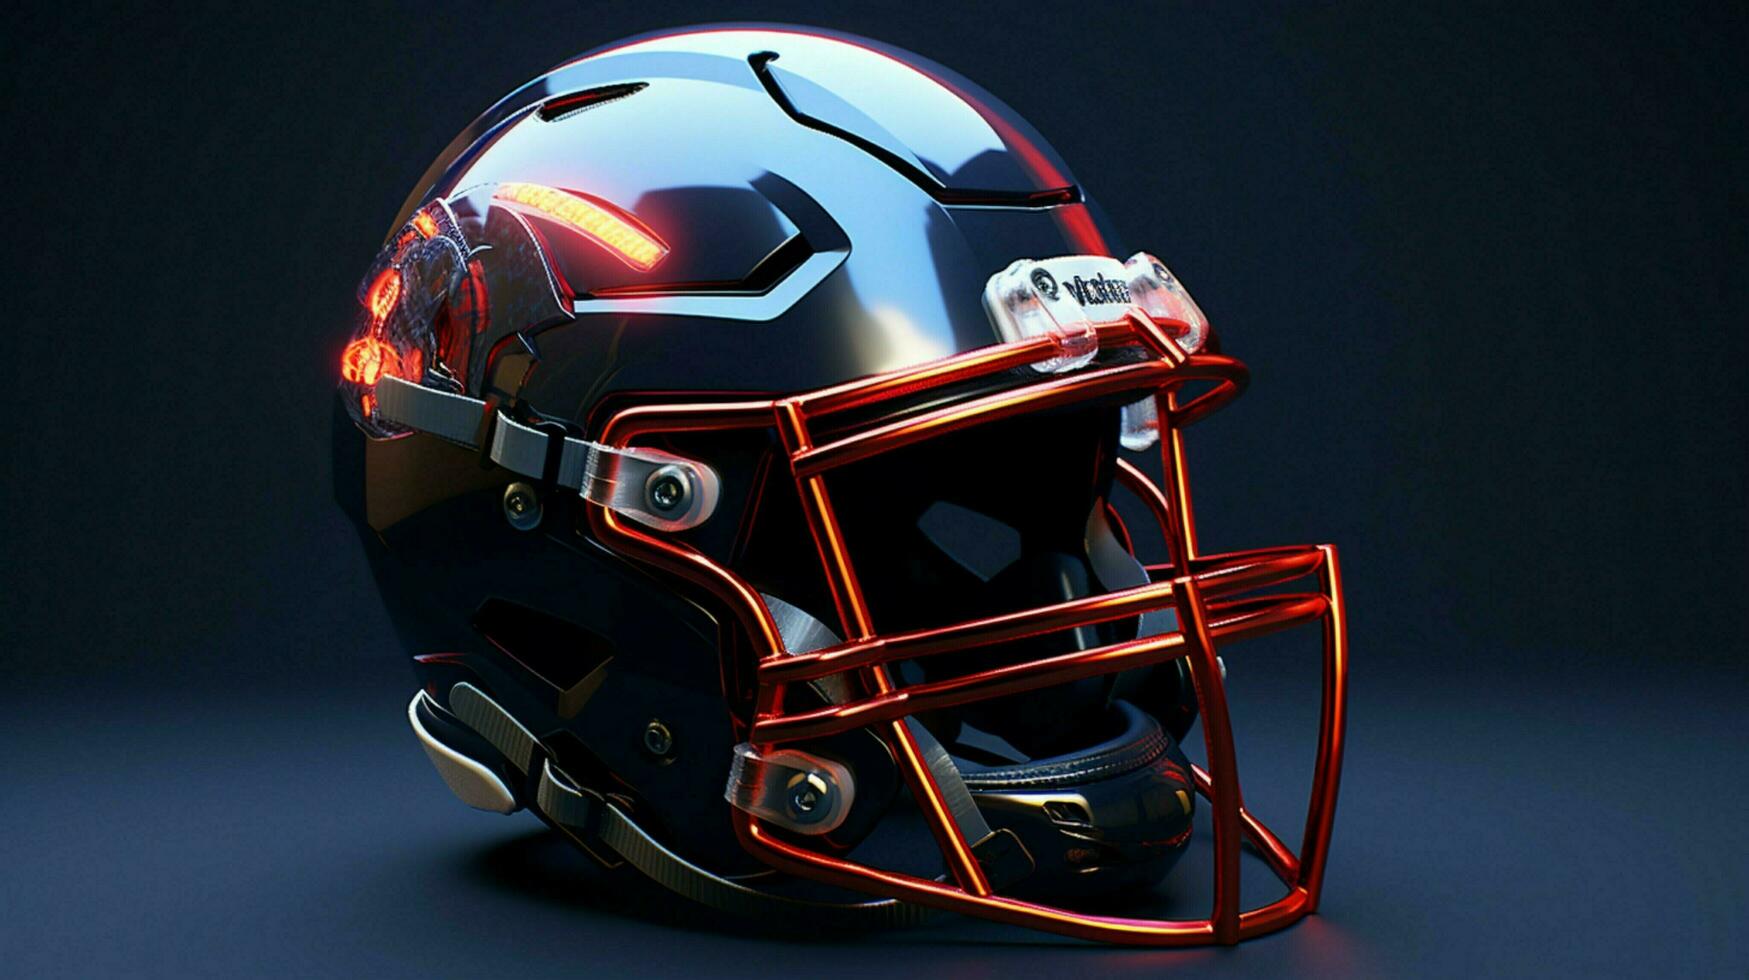 americano futebol capacete com luzes foto